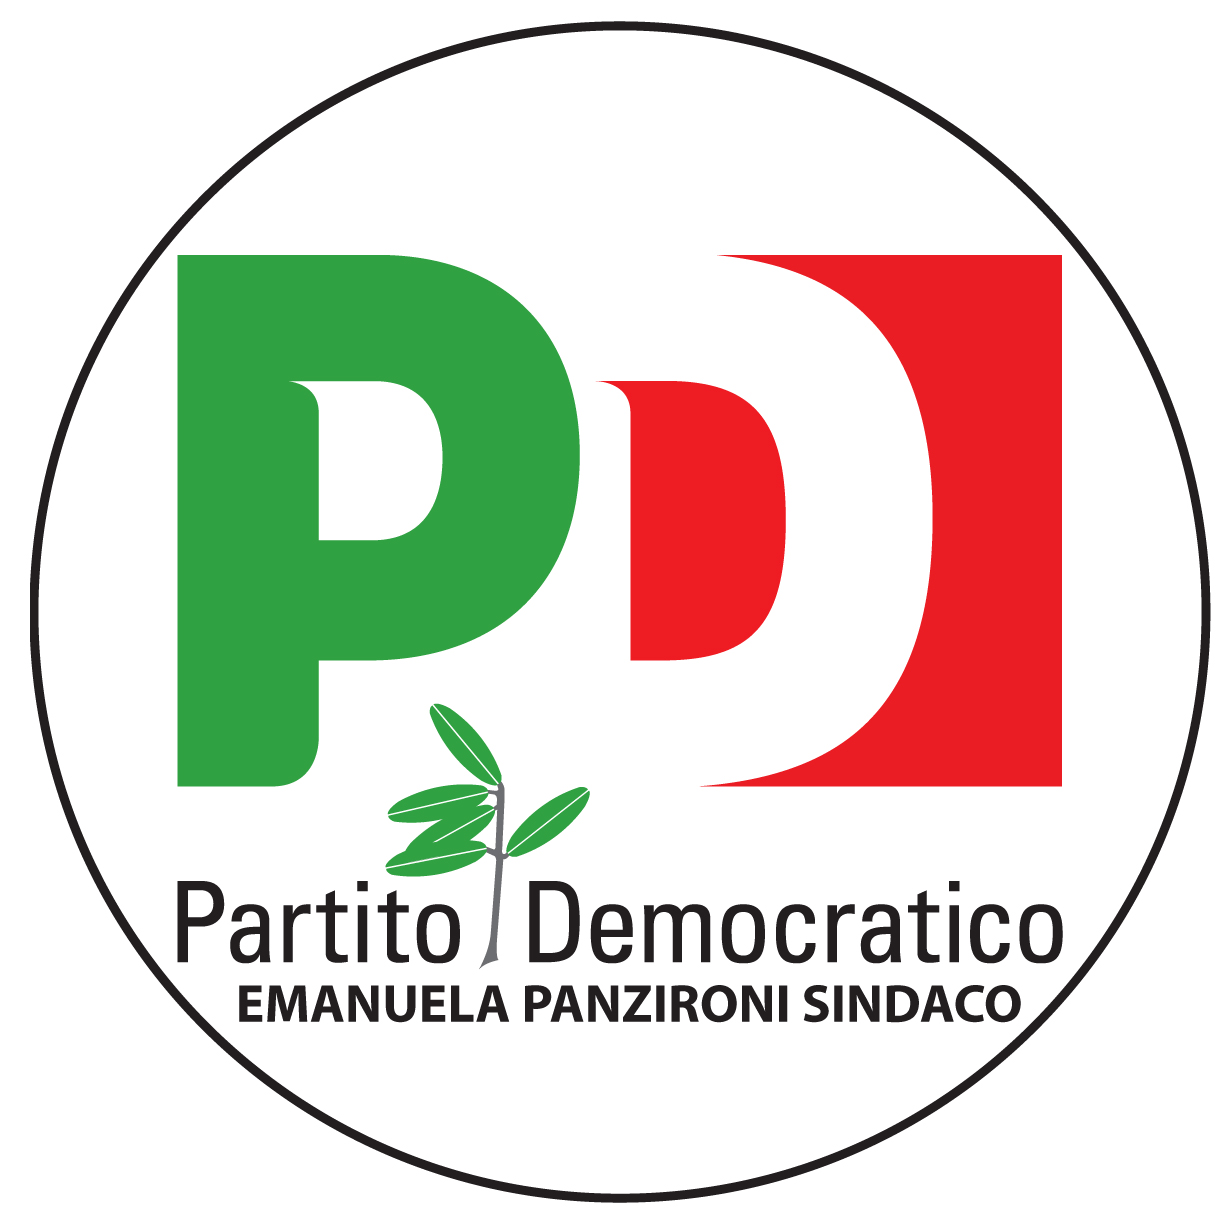 PARTITO DEMOCRATICO EMANUELA PANZIRONI SINDACO